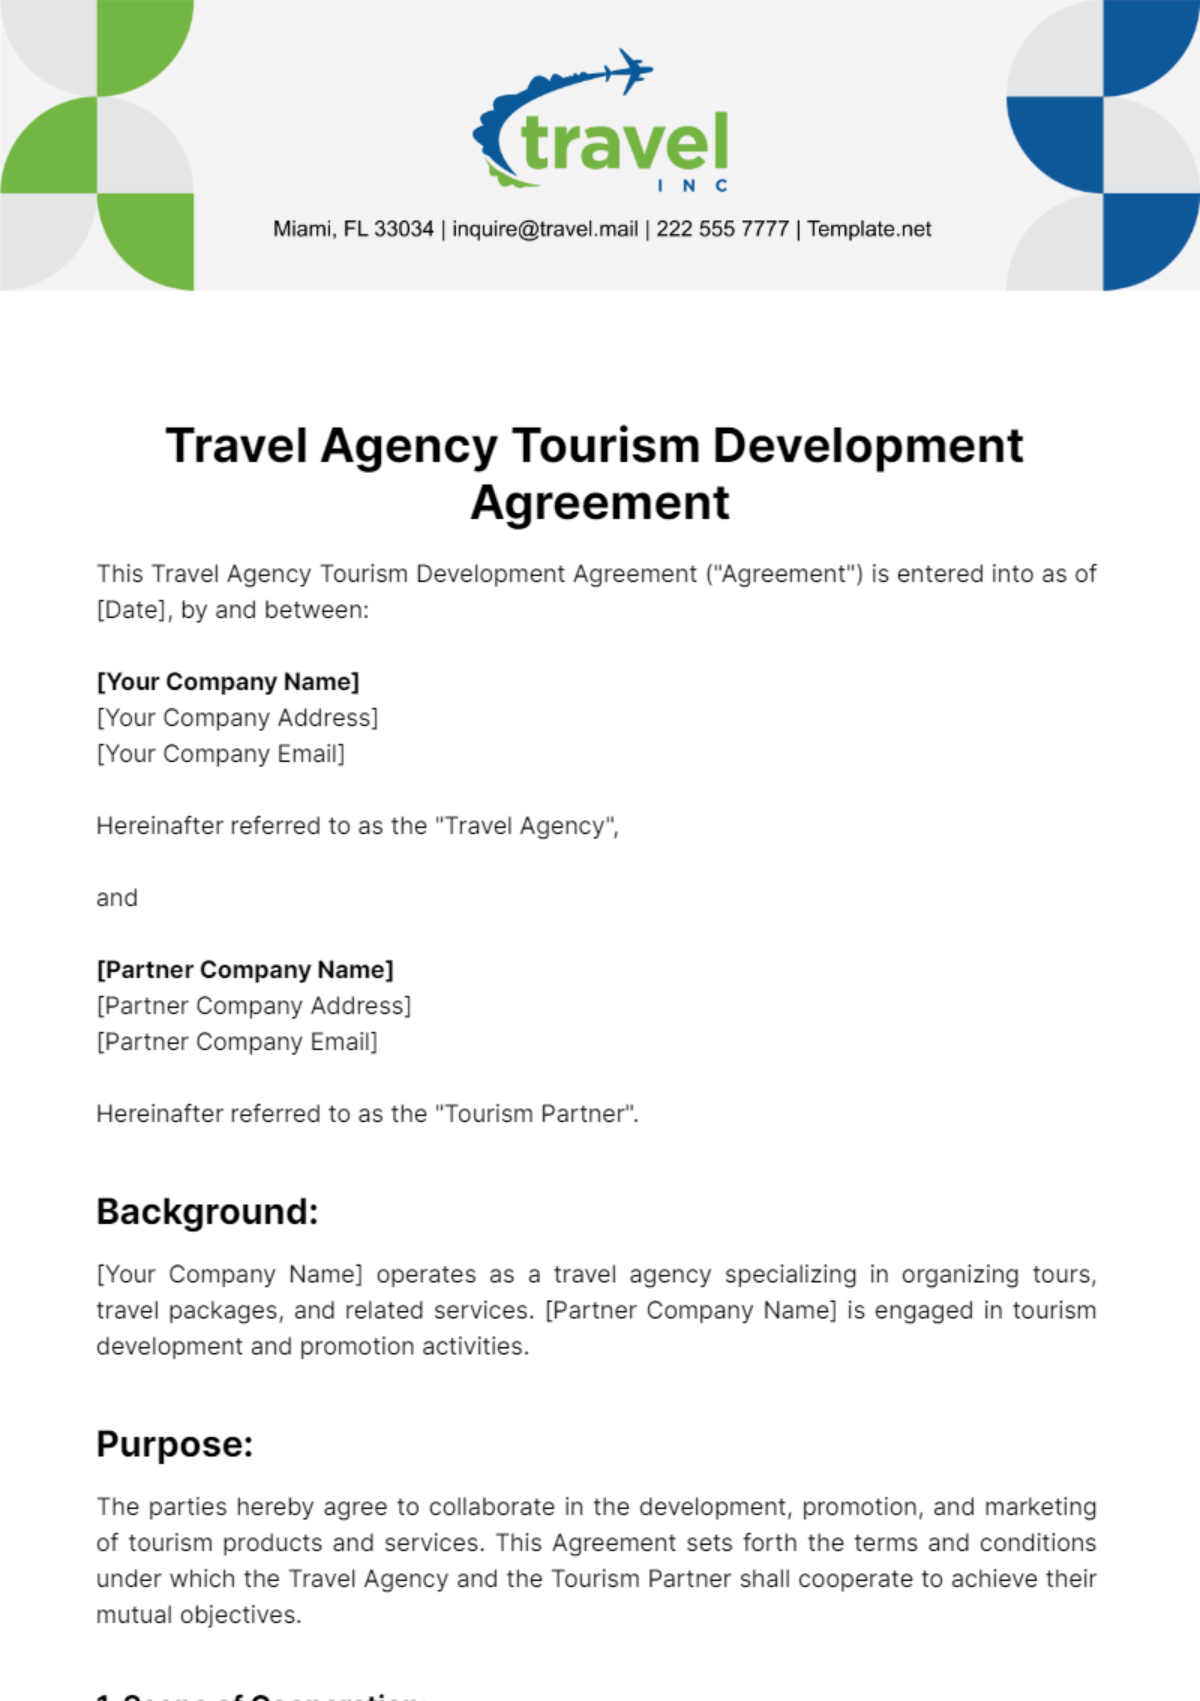 Travel Agency Tourism Development Agreement Template